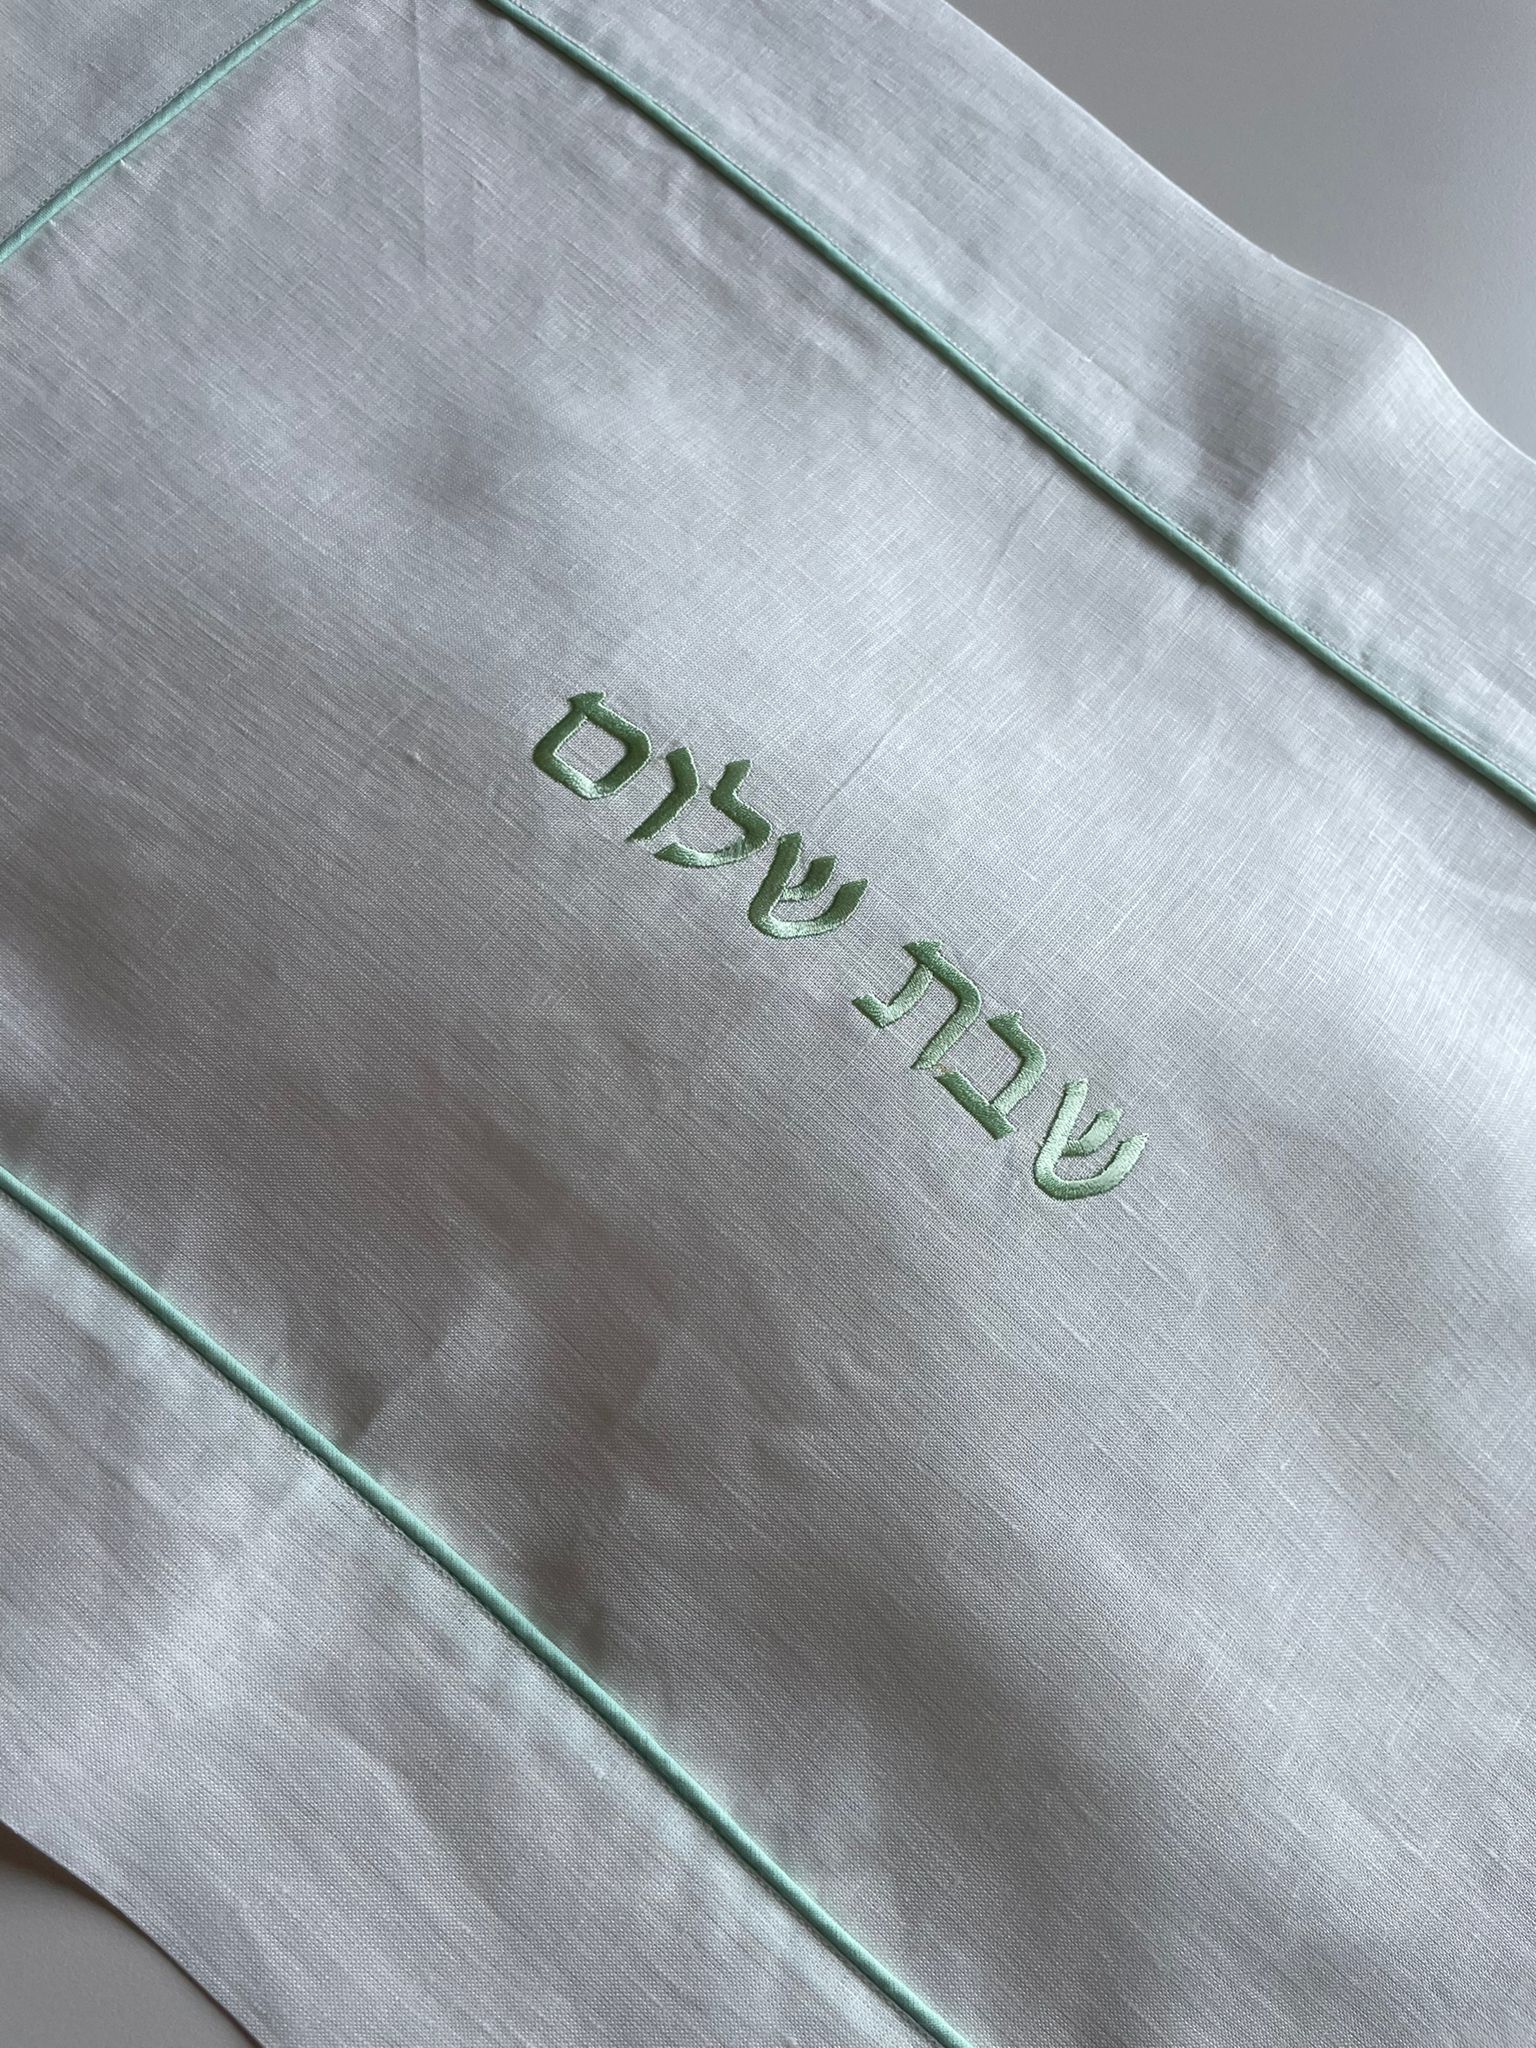 Green Challah Cover Shabat Shalom text